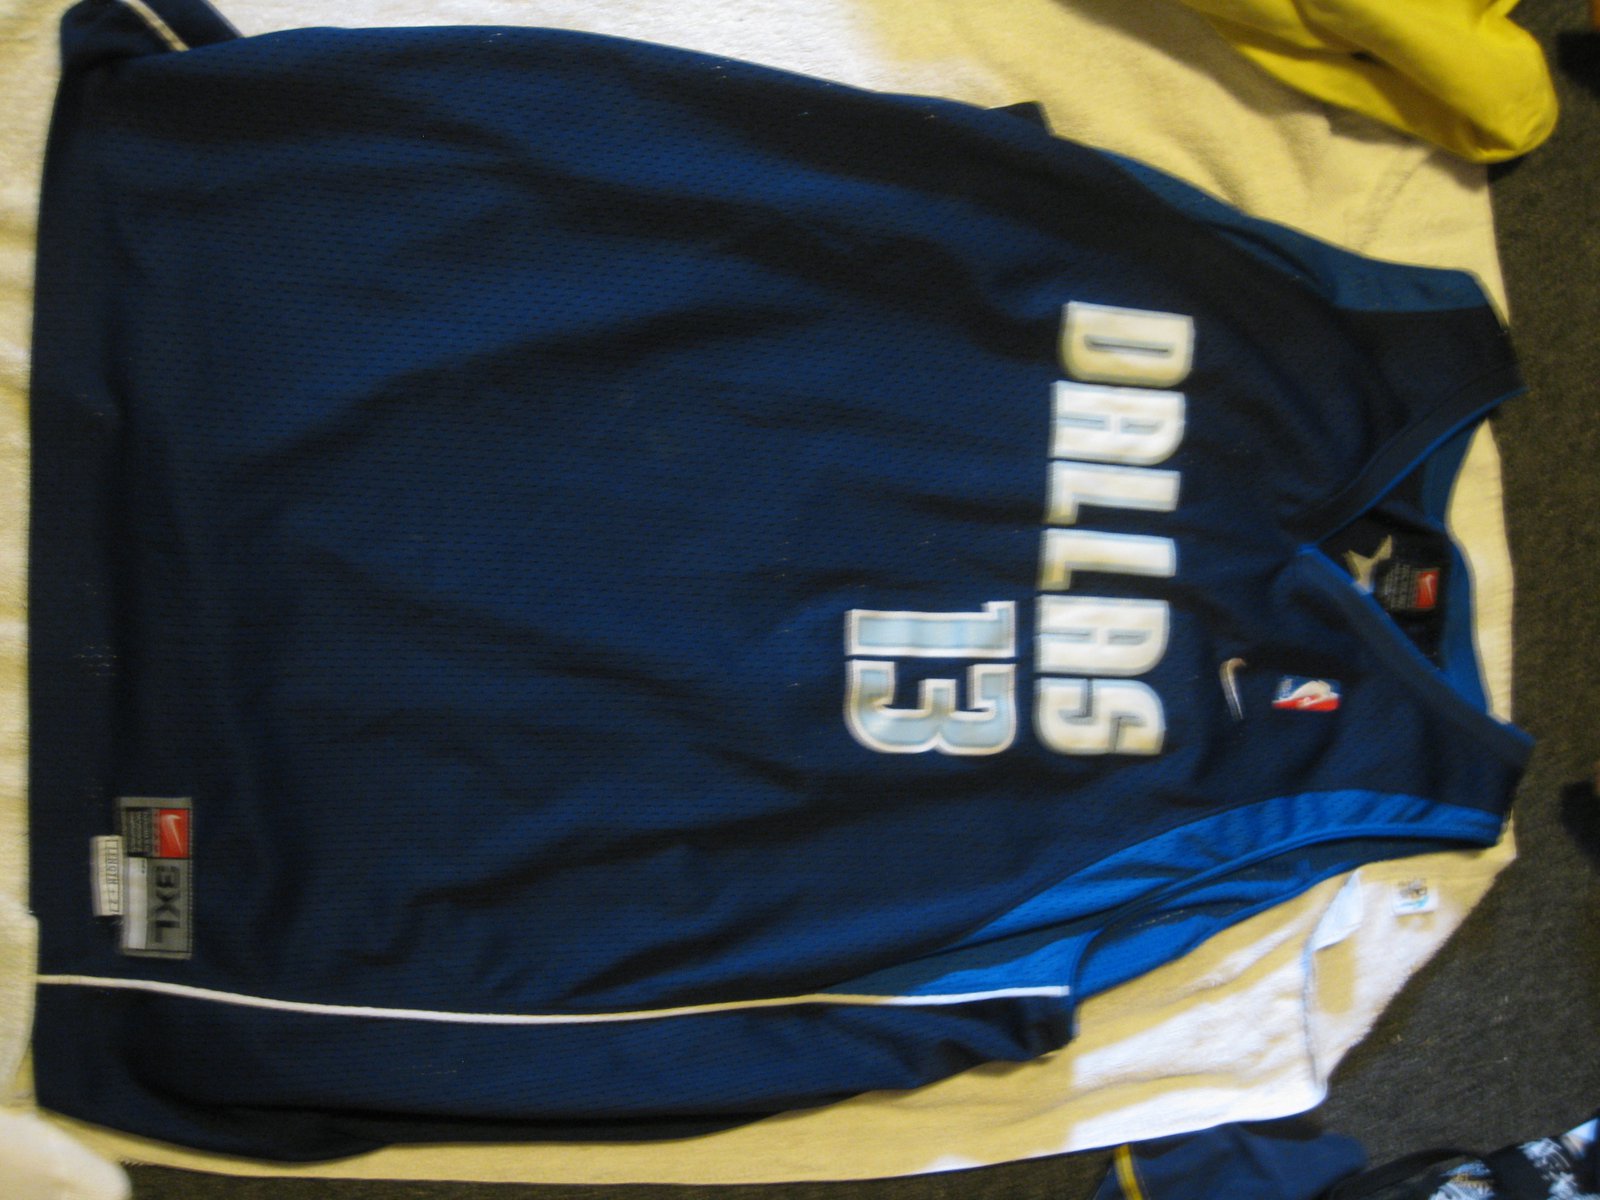 Dallas 3xl jersey